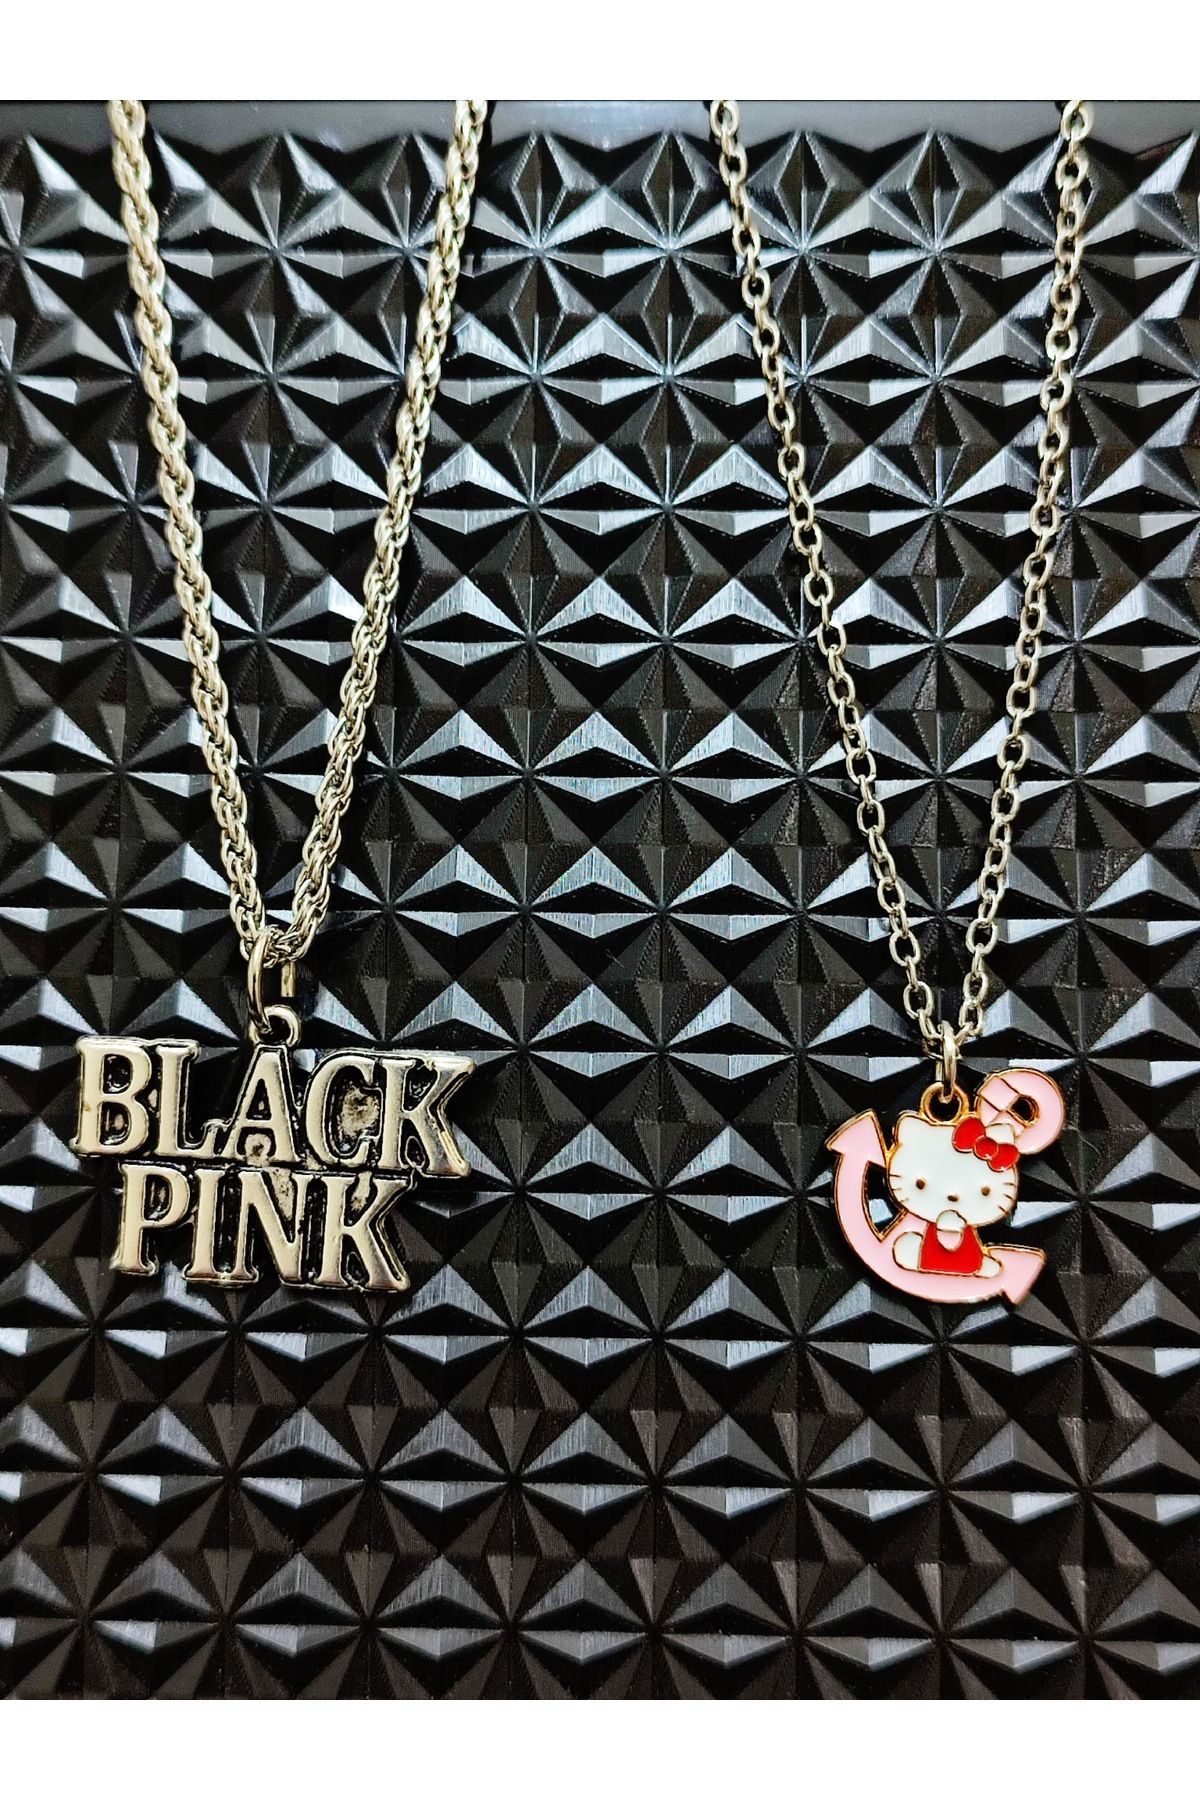 Black Point Black Pink ve Hello Kitty 2 ayrı Hediye Paketi